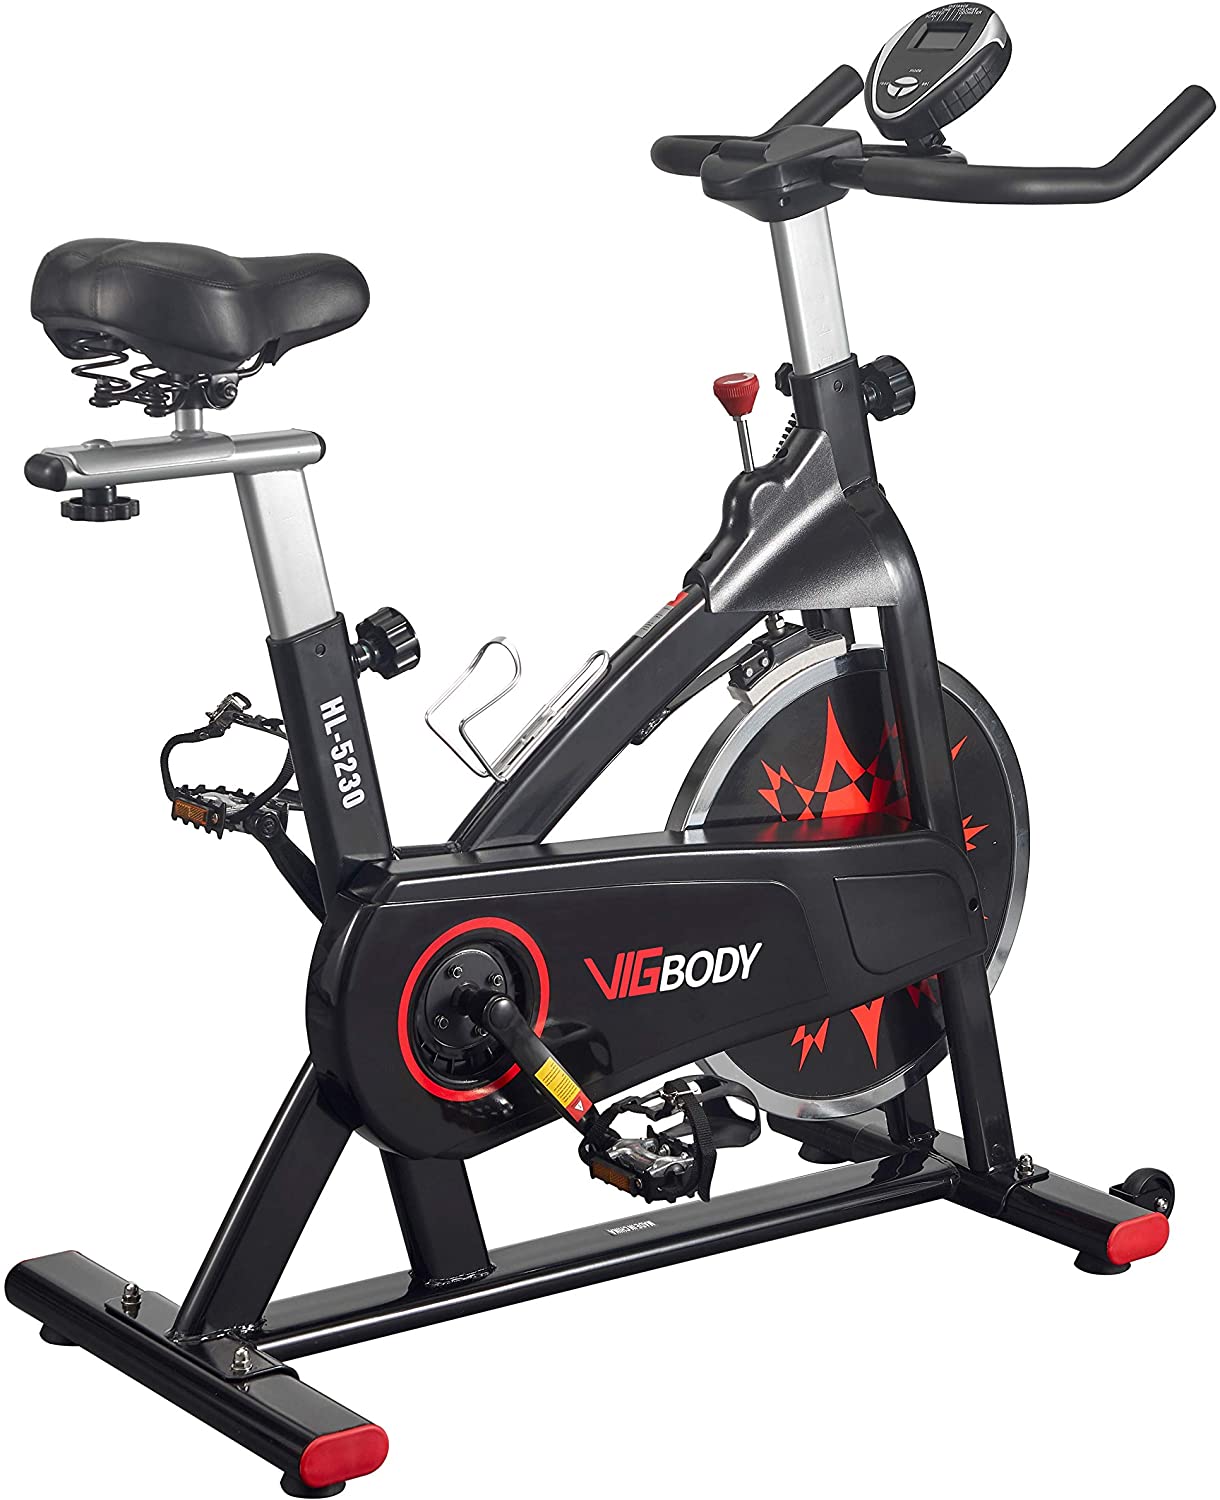 VIGBODY Exercise Bike Indoor Cycling Bike Adjustable Stationary Bicycle for Home Gym